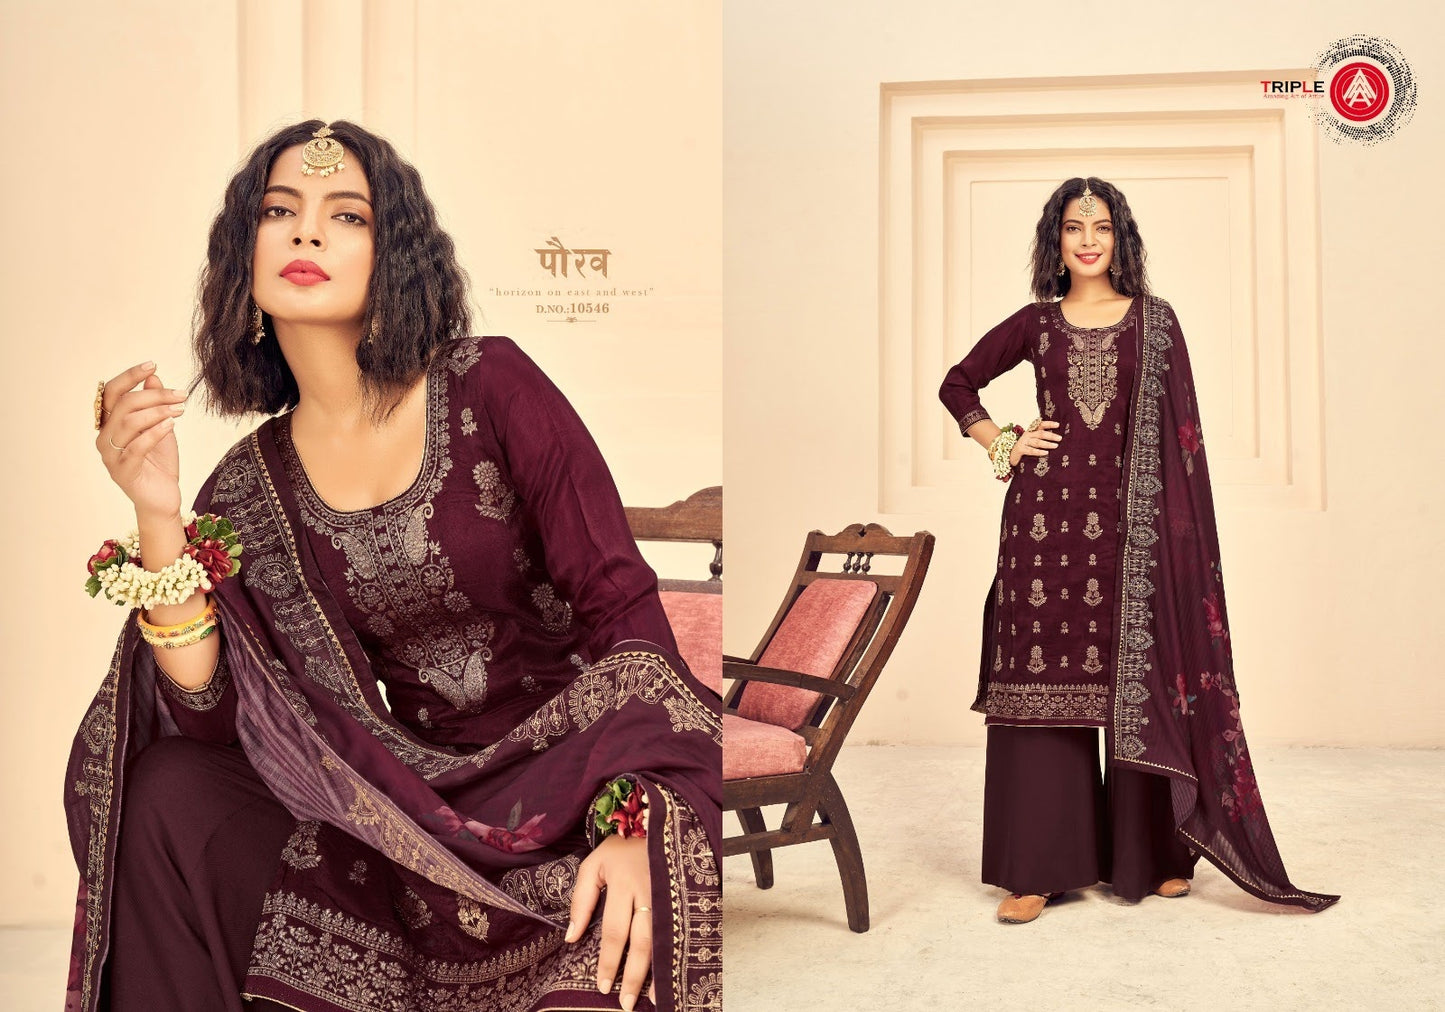 Bahar Triple Aaa Dola Jacquard Plazzo Style Suits